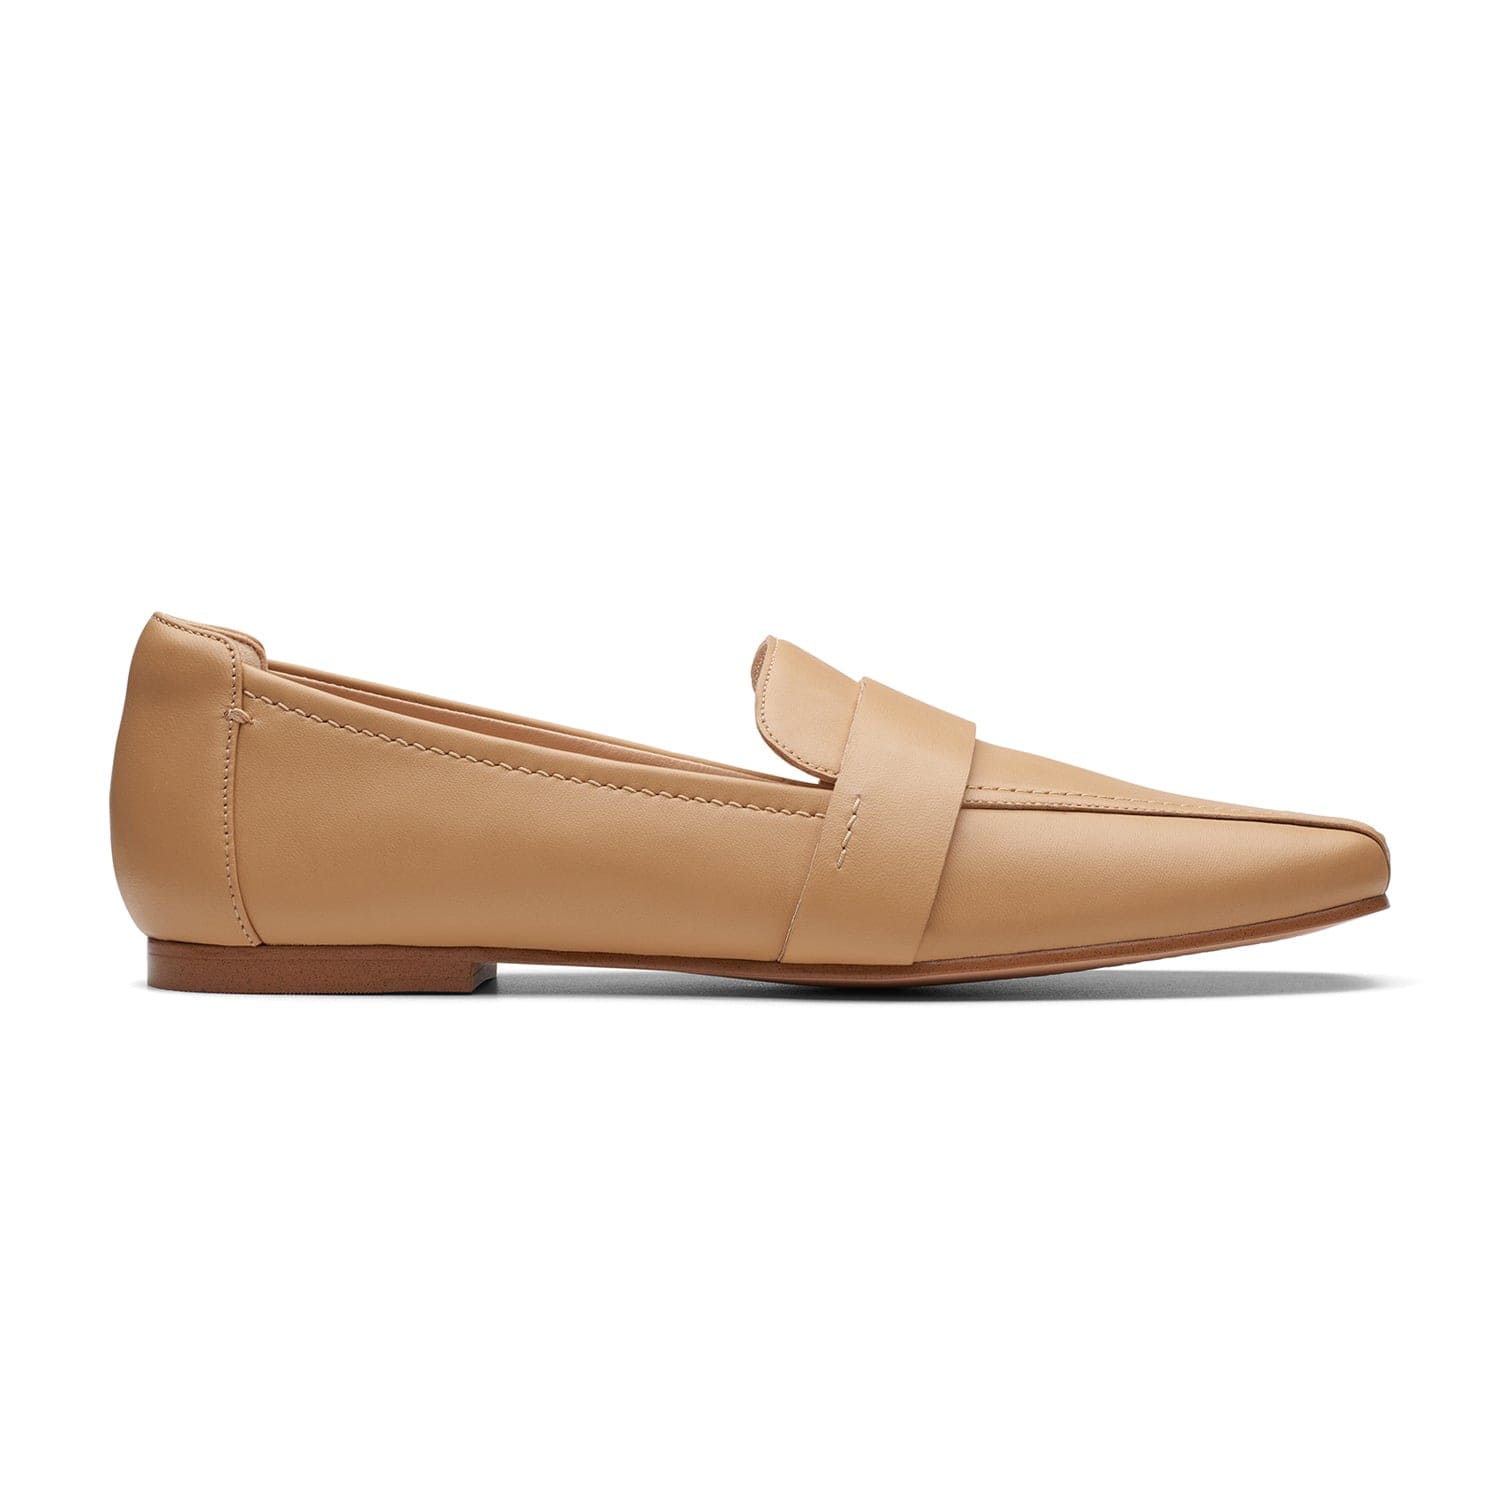 Clarks Seren Flat Shoes - Camel Leather - 261716134 - D Width (Standard Fit)